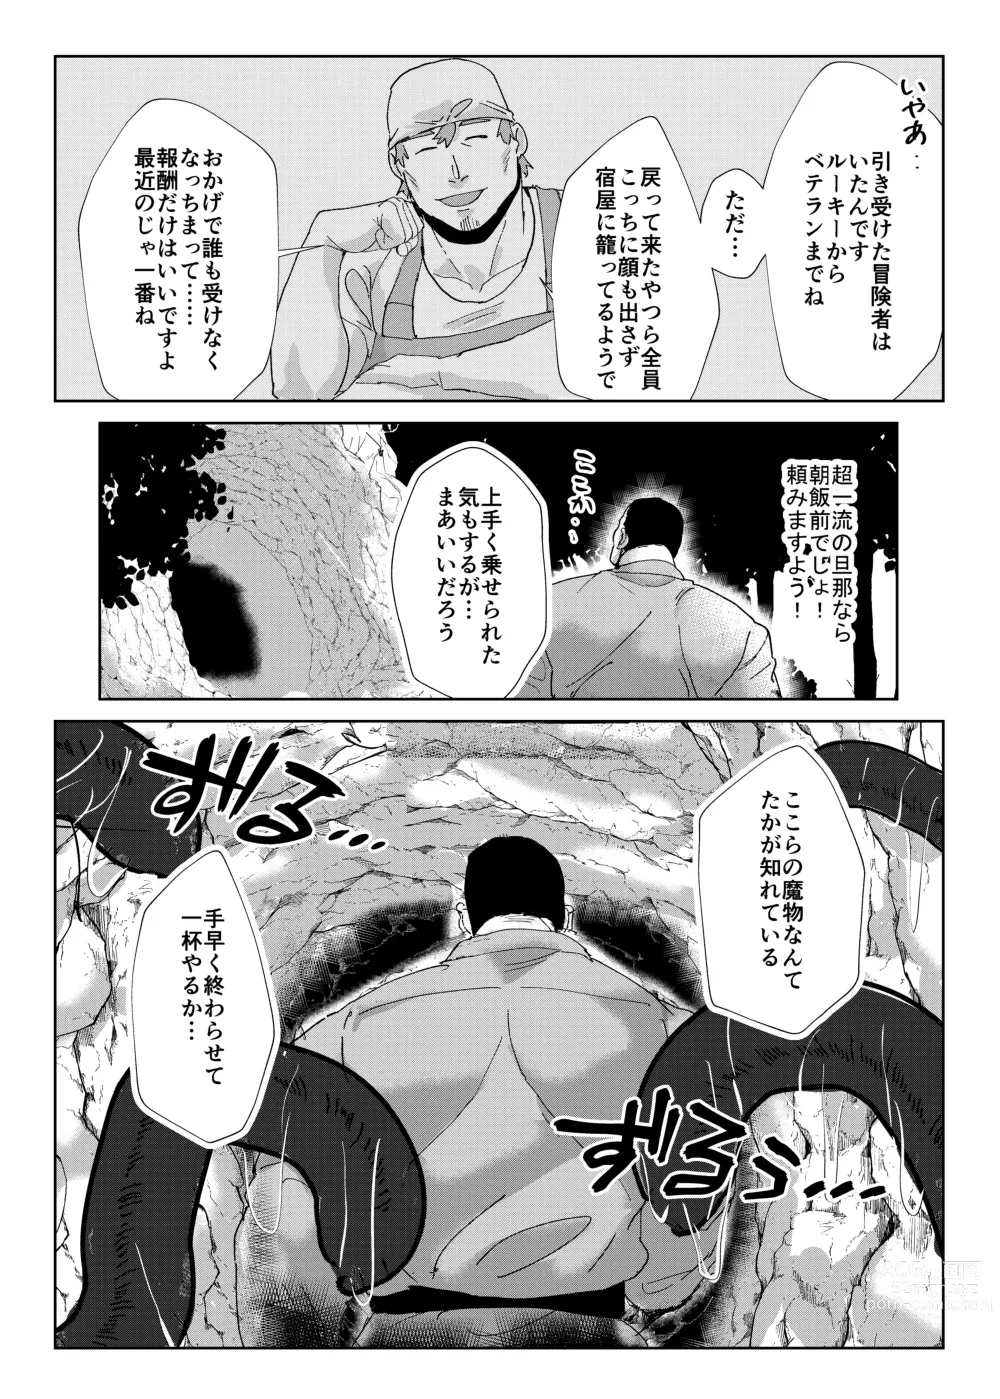 Page 5 of doujinshi Inyoku no Rougoku